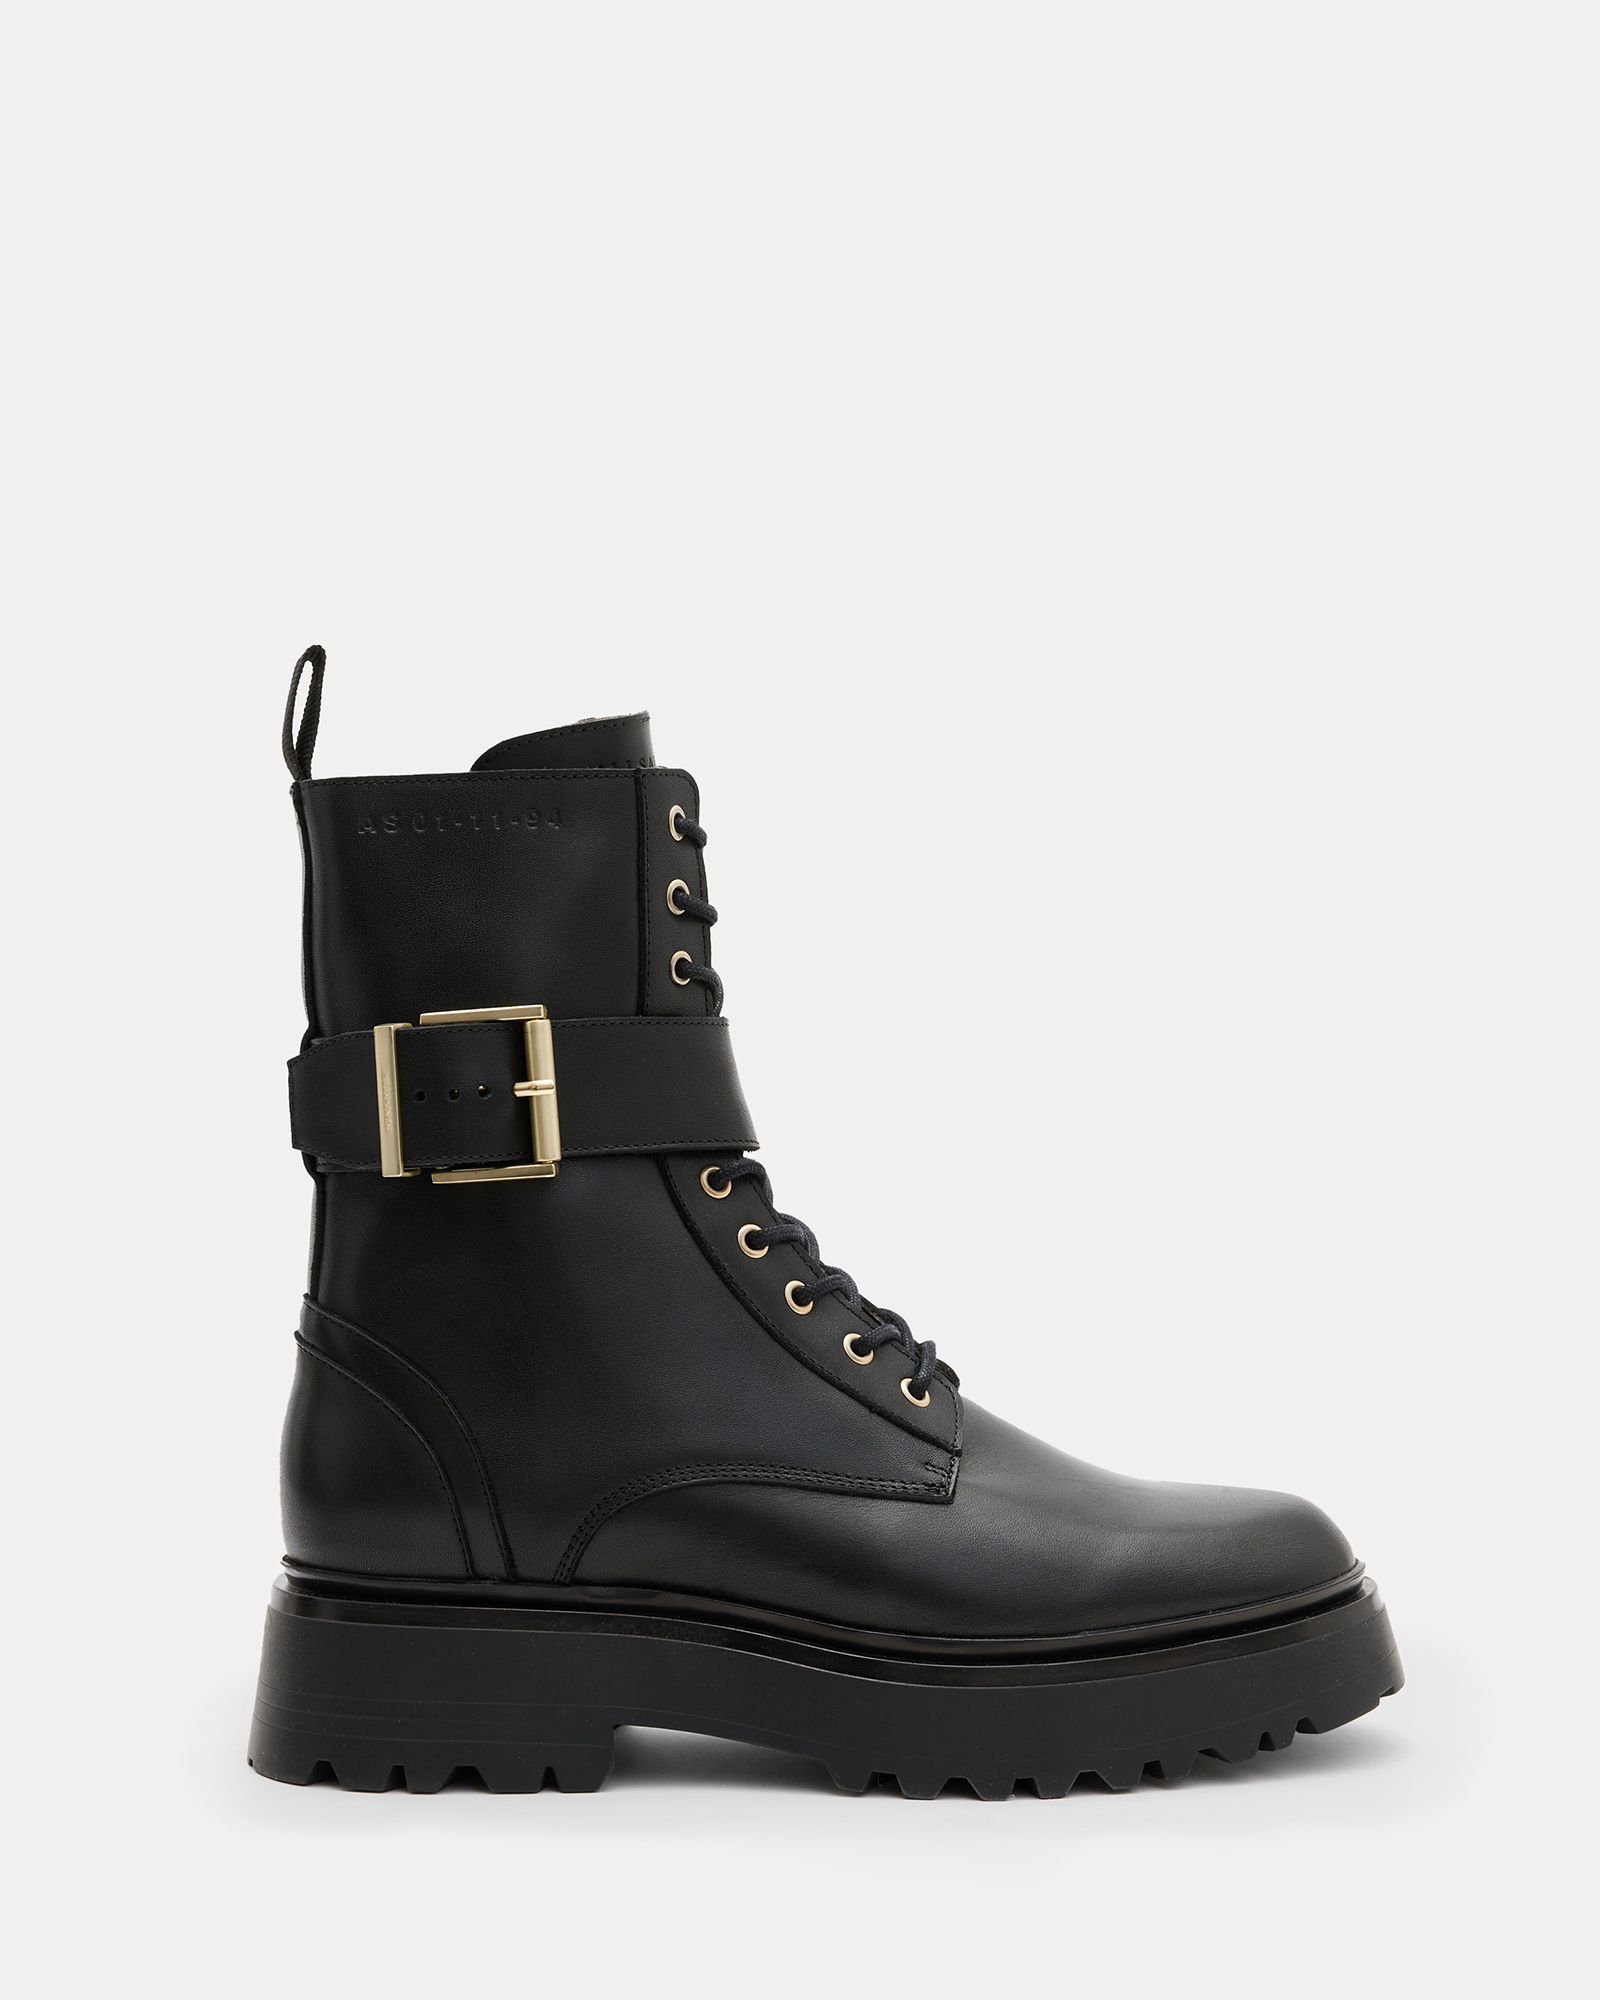 AllSaints Onyx Leather Buckle Boots,, BLACK/WARM BRASS